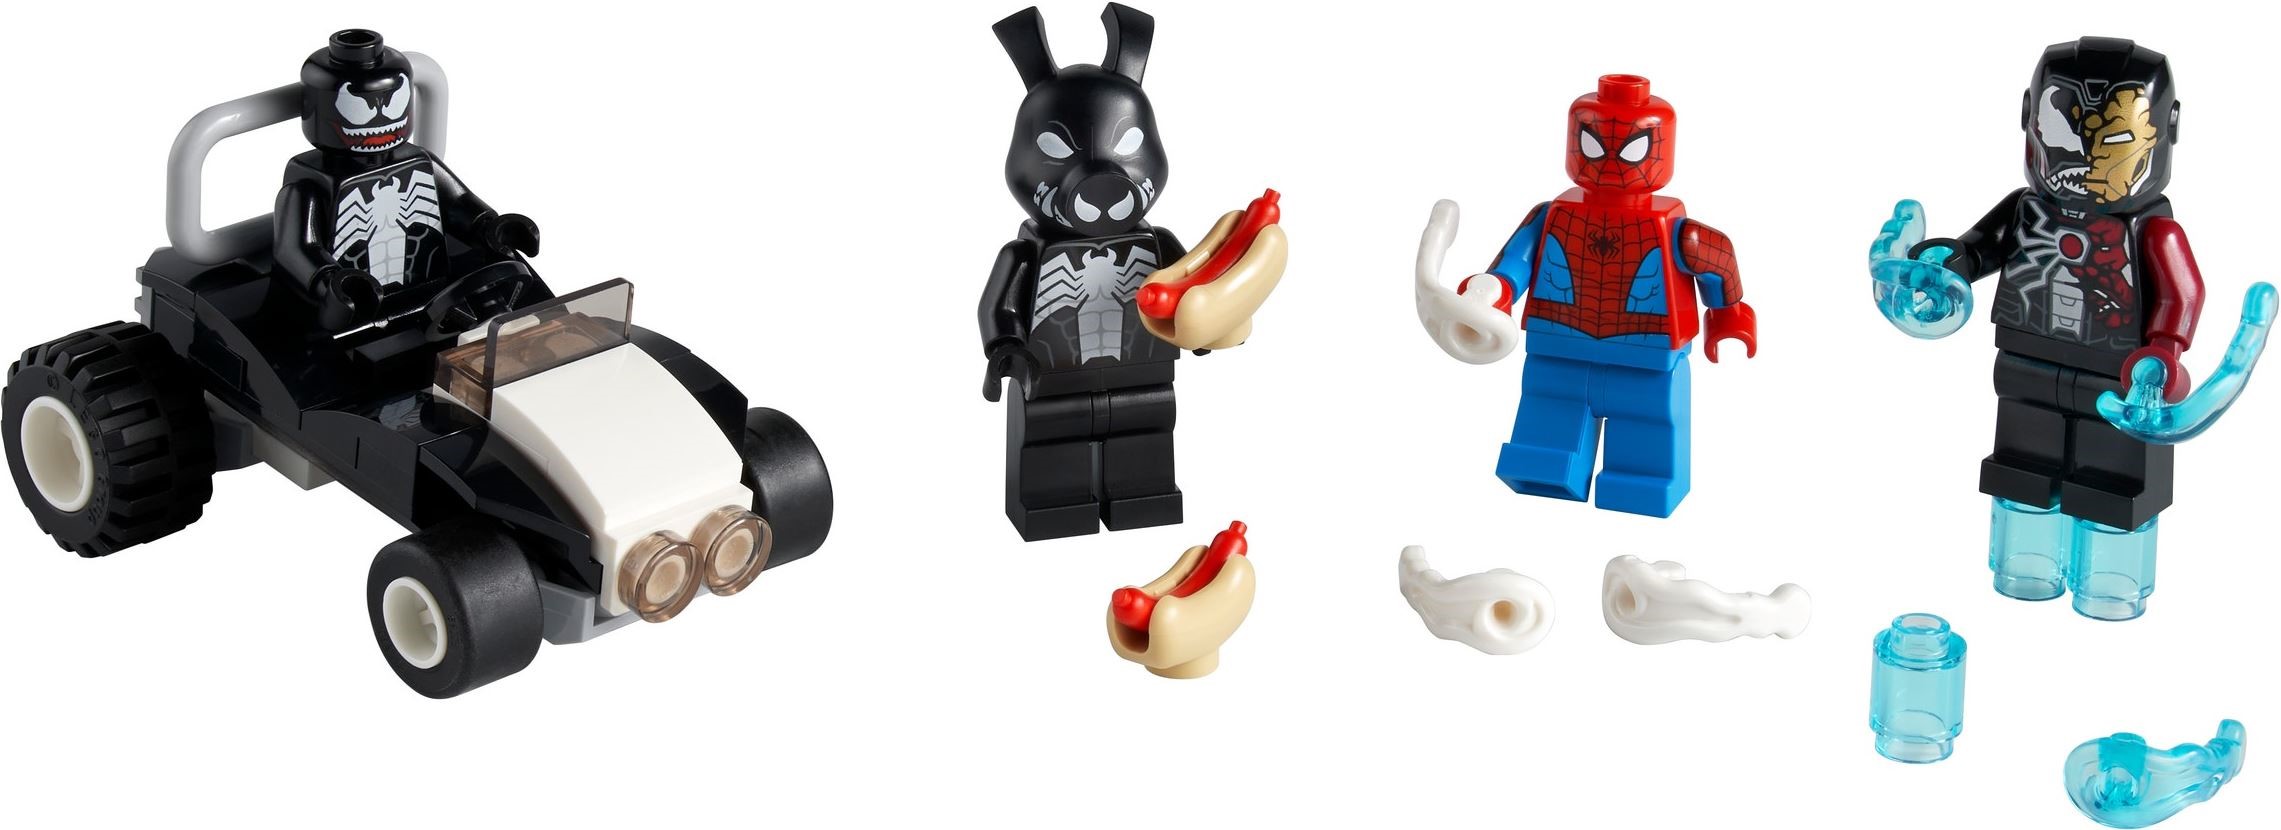 Lego Super Heroes Venom sh542 From 76175 Spider-Man Minifigure Figurine New